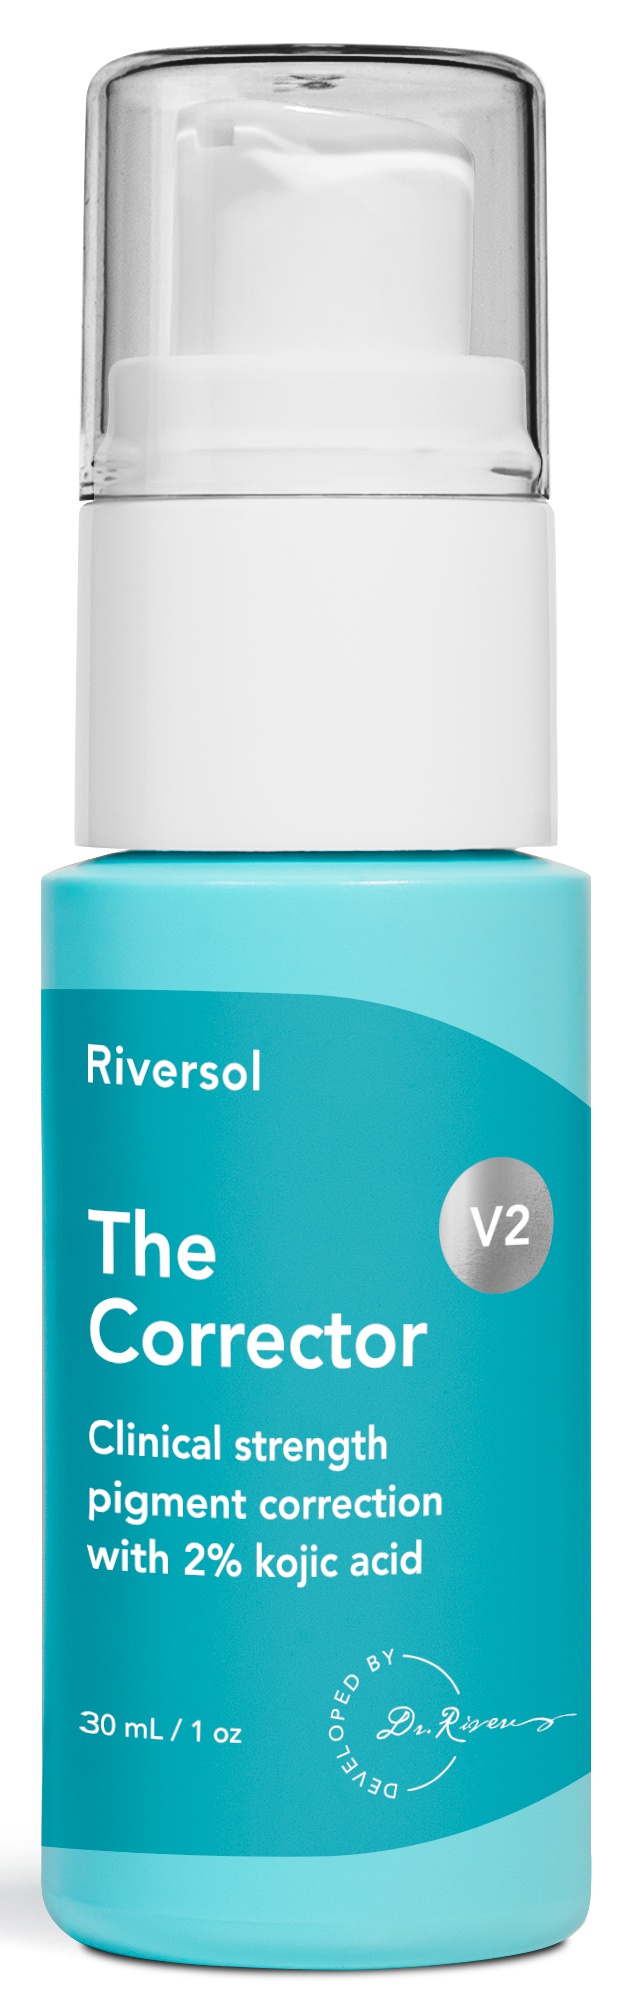 Riversol The Corrector V2